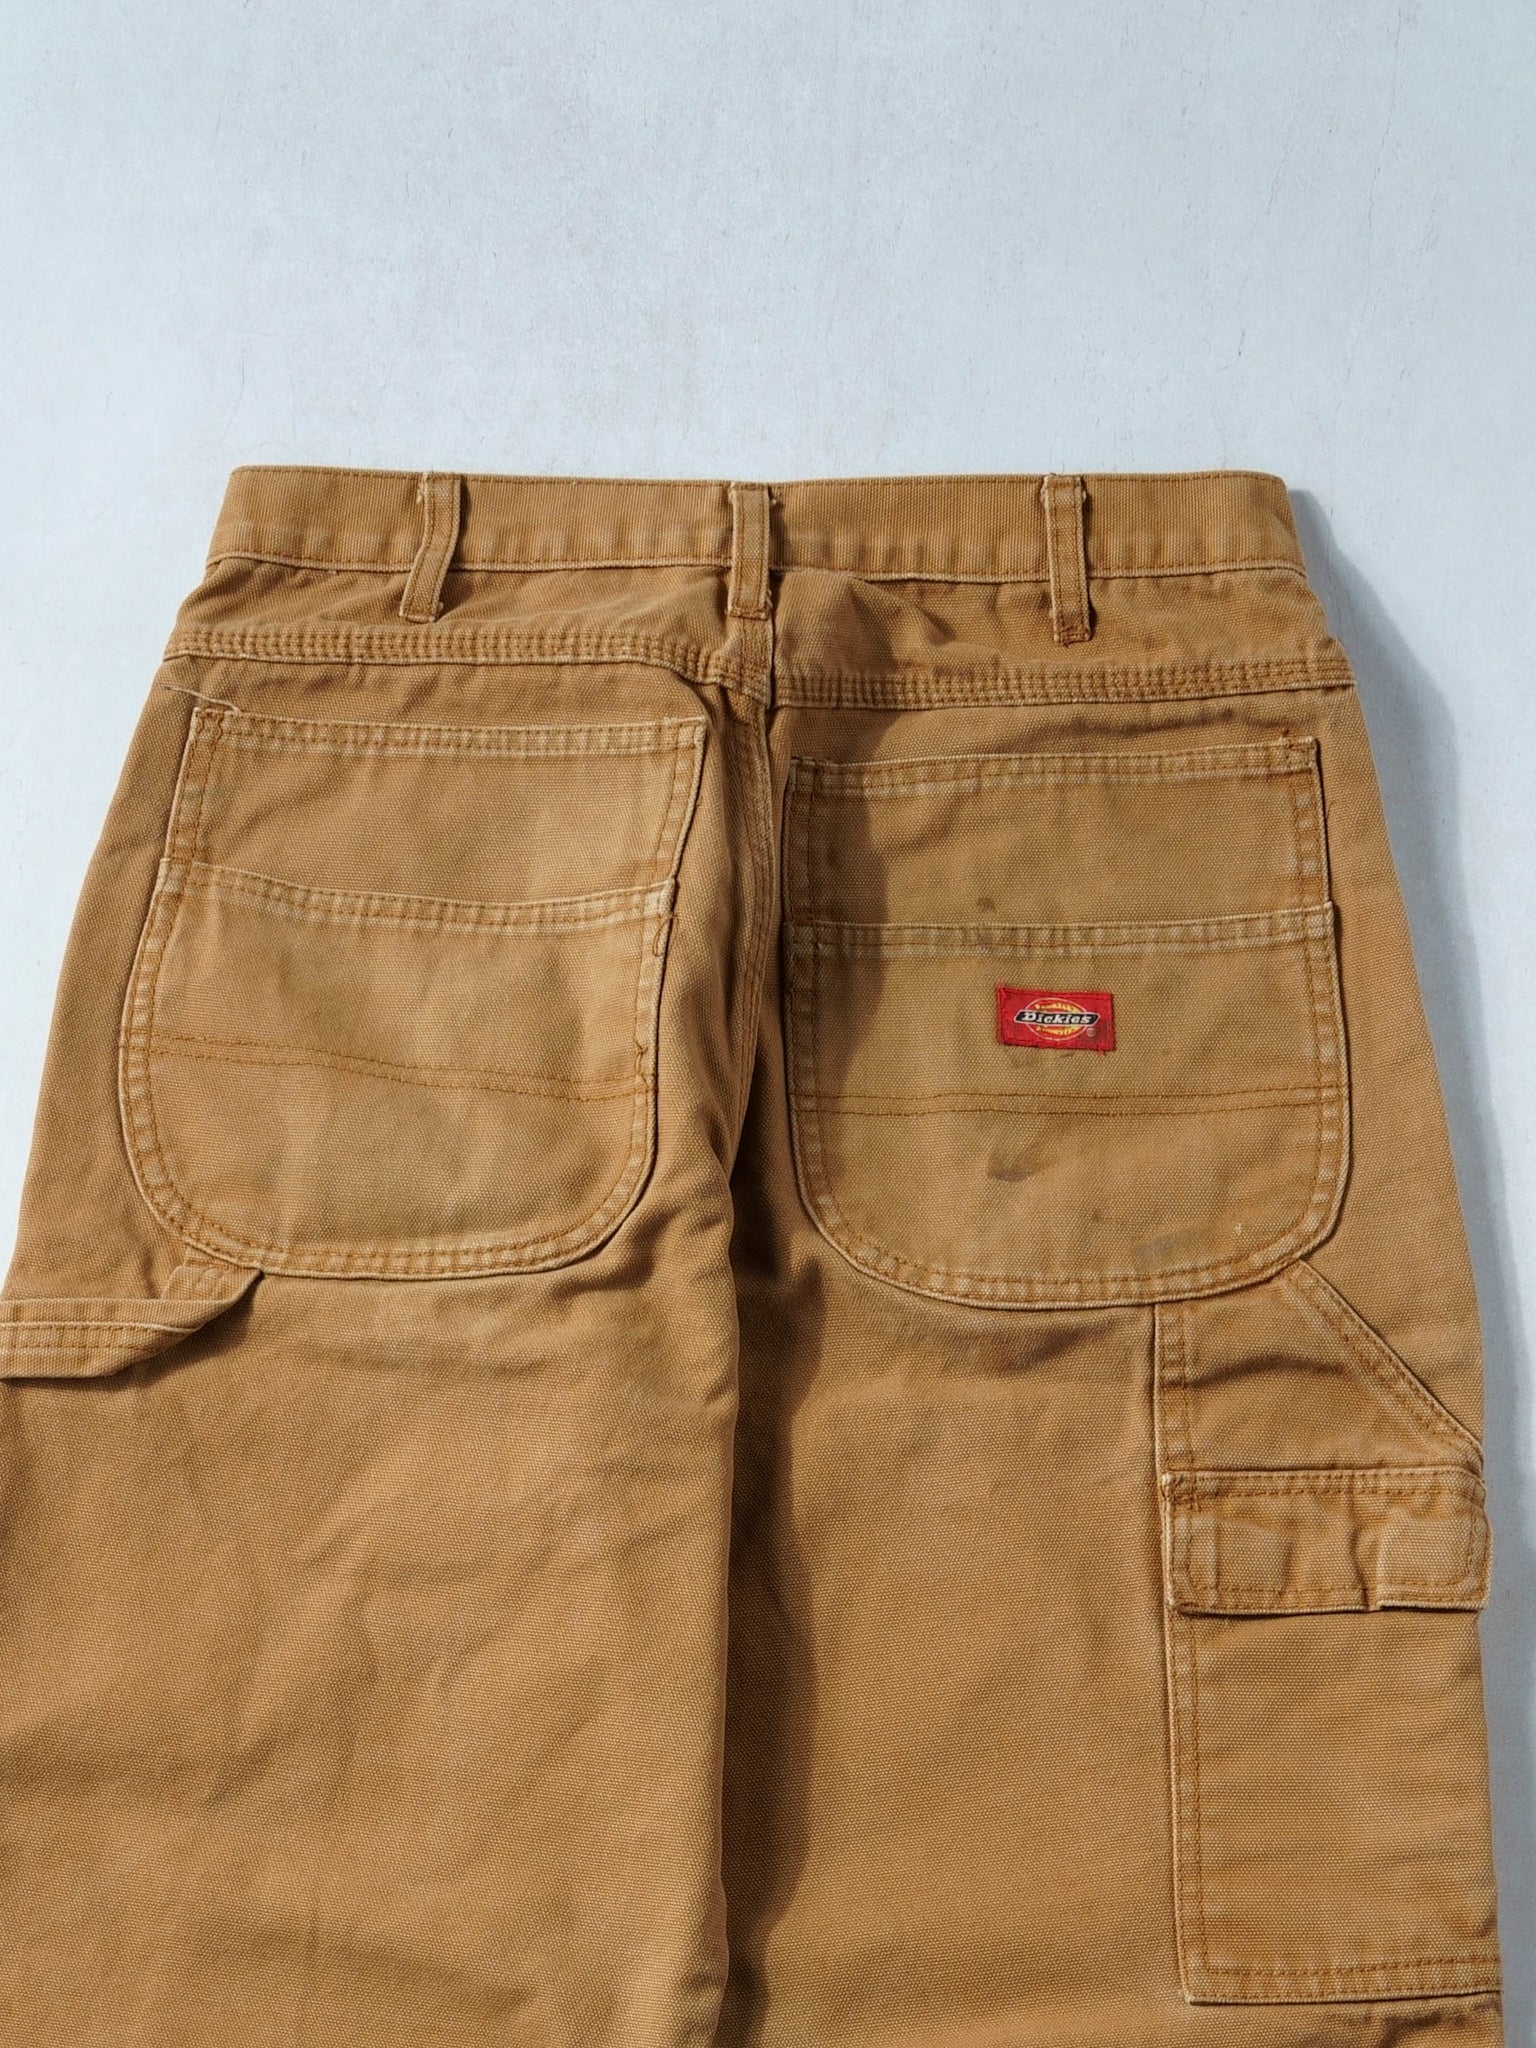 Vintage 90s Khaki Dickies Double Knee Carpenter Pants (32x31)